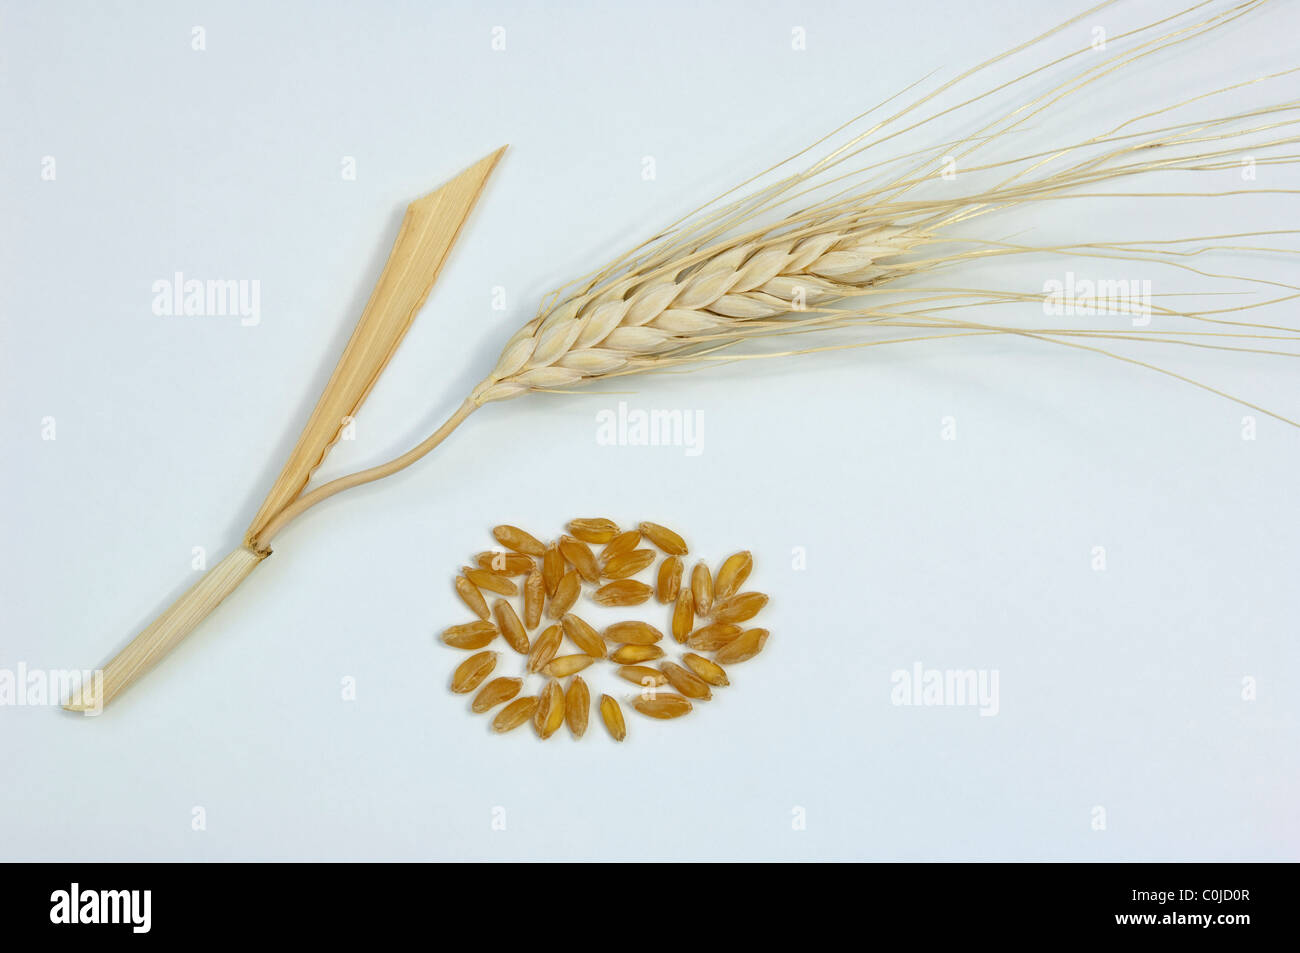 Durum Wheat, Macaroni Wheat (Triticum durum), ear and seeds. Studio picture against a white background. Stock Photo